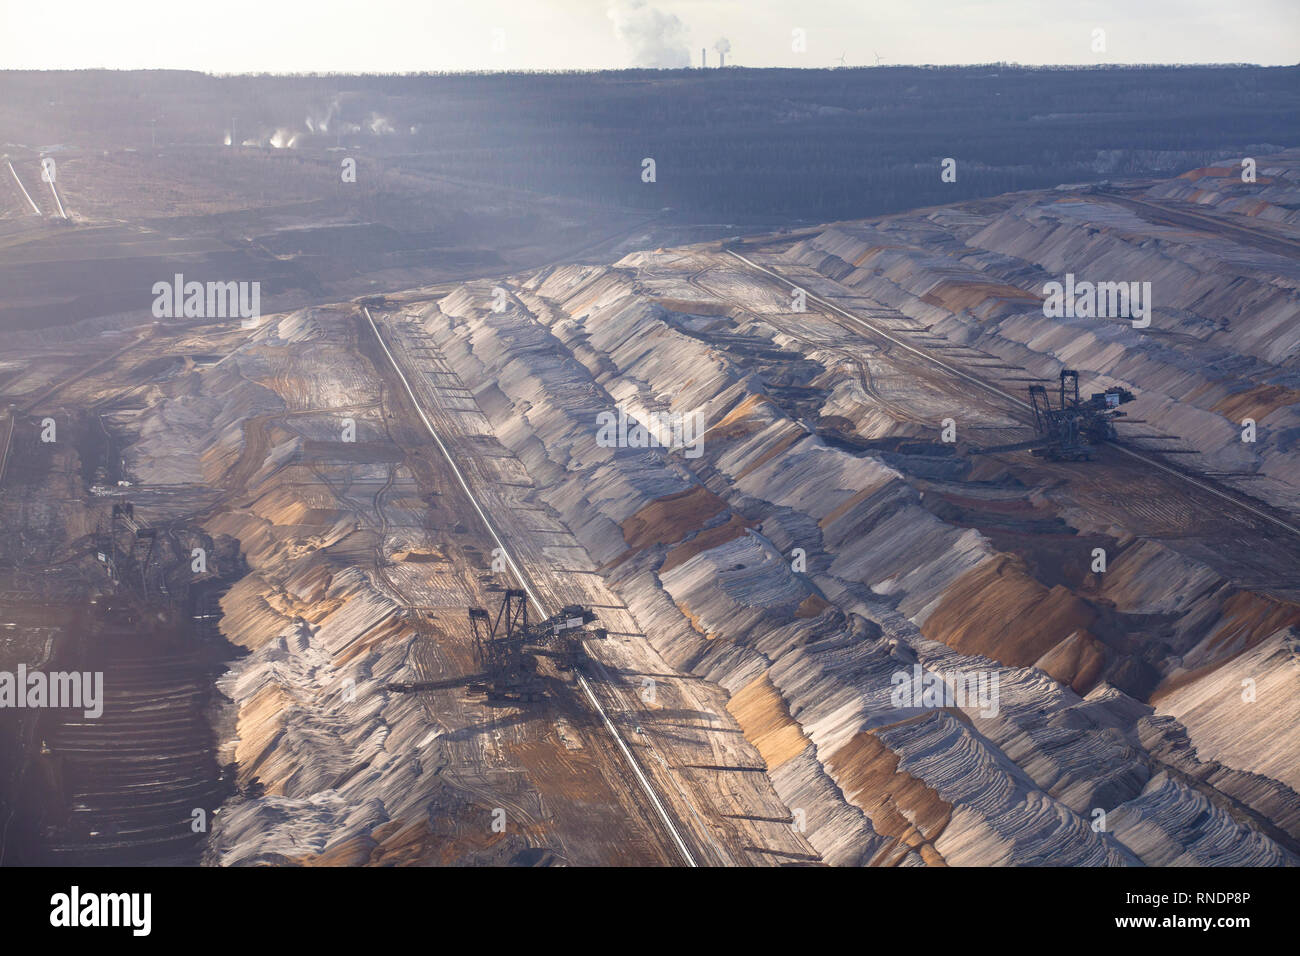 brown coal opencast mining Hambach, operated by RWE Power AG, Germany.  Braunkohletagebau Hambach, Betreiber RWE Power AG, Deutschland. Stock Photo